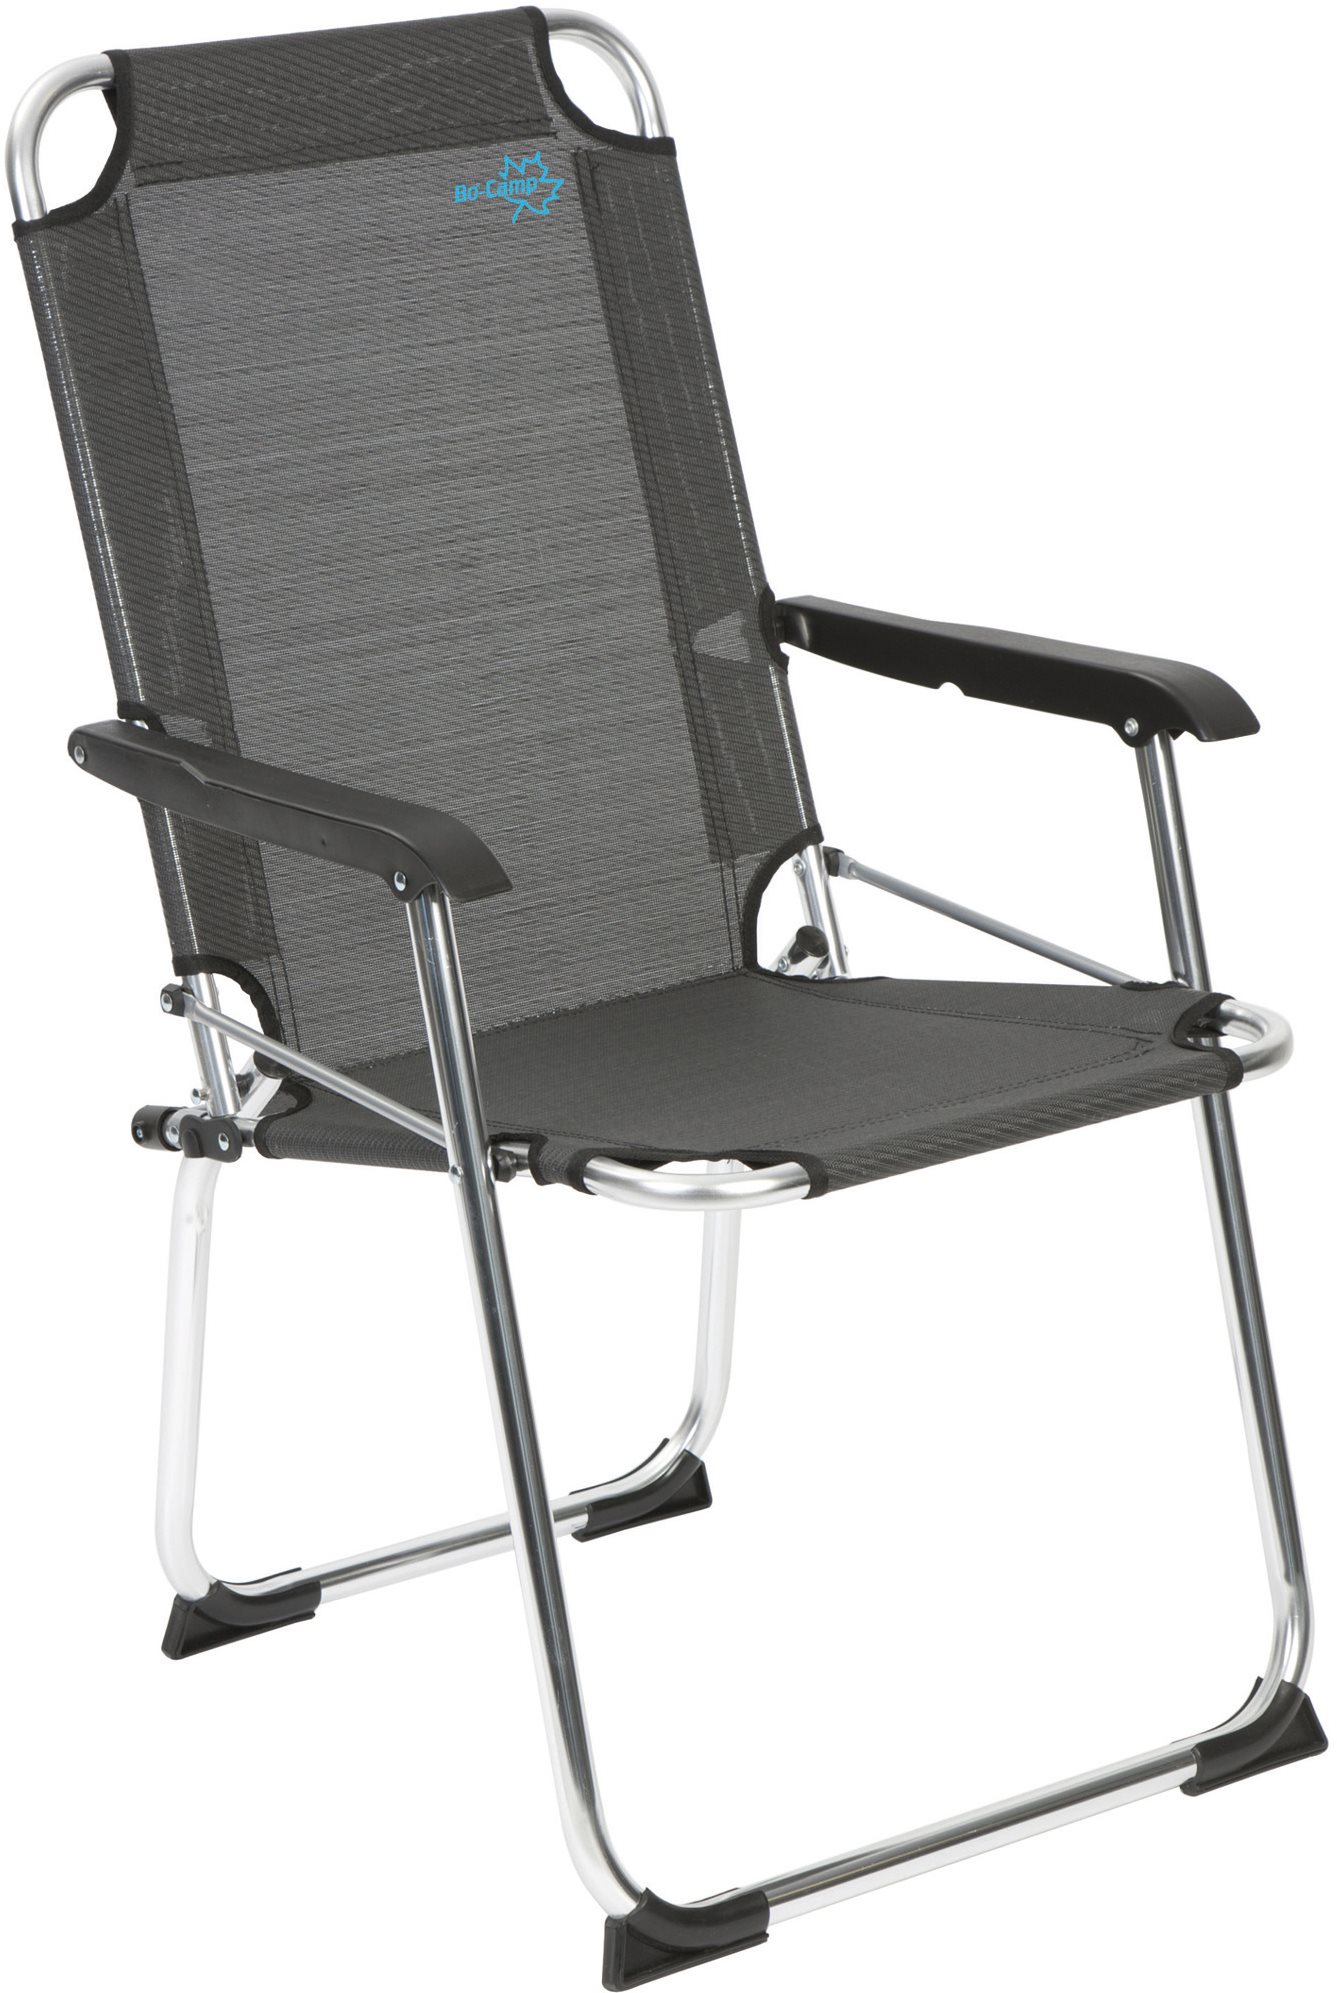 Bo-Camp Chair Copa Rio Comfort Deluxe szürke